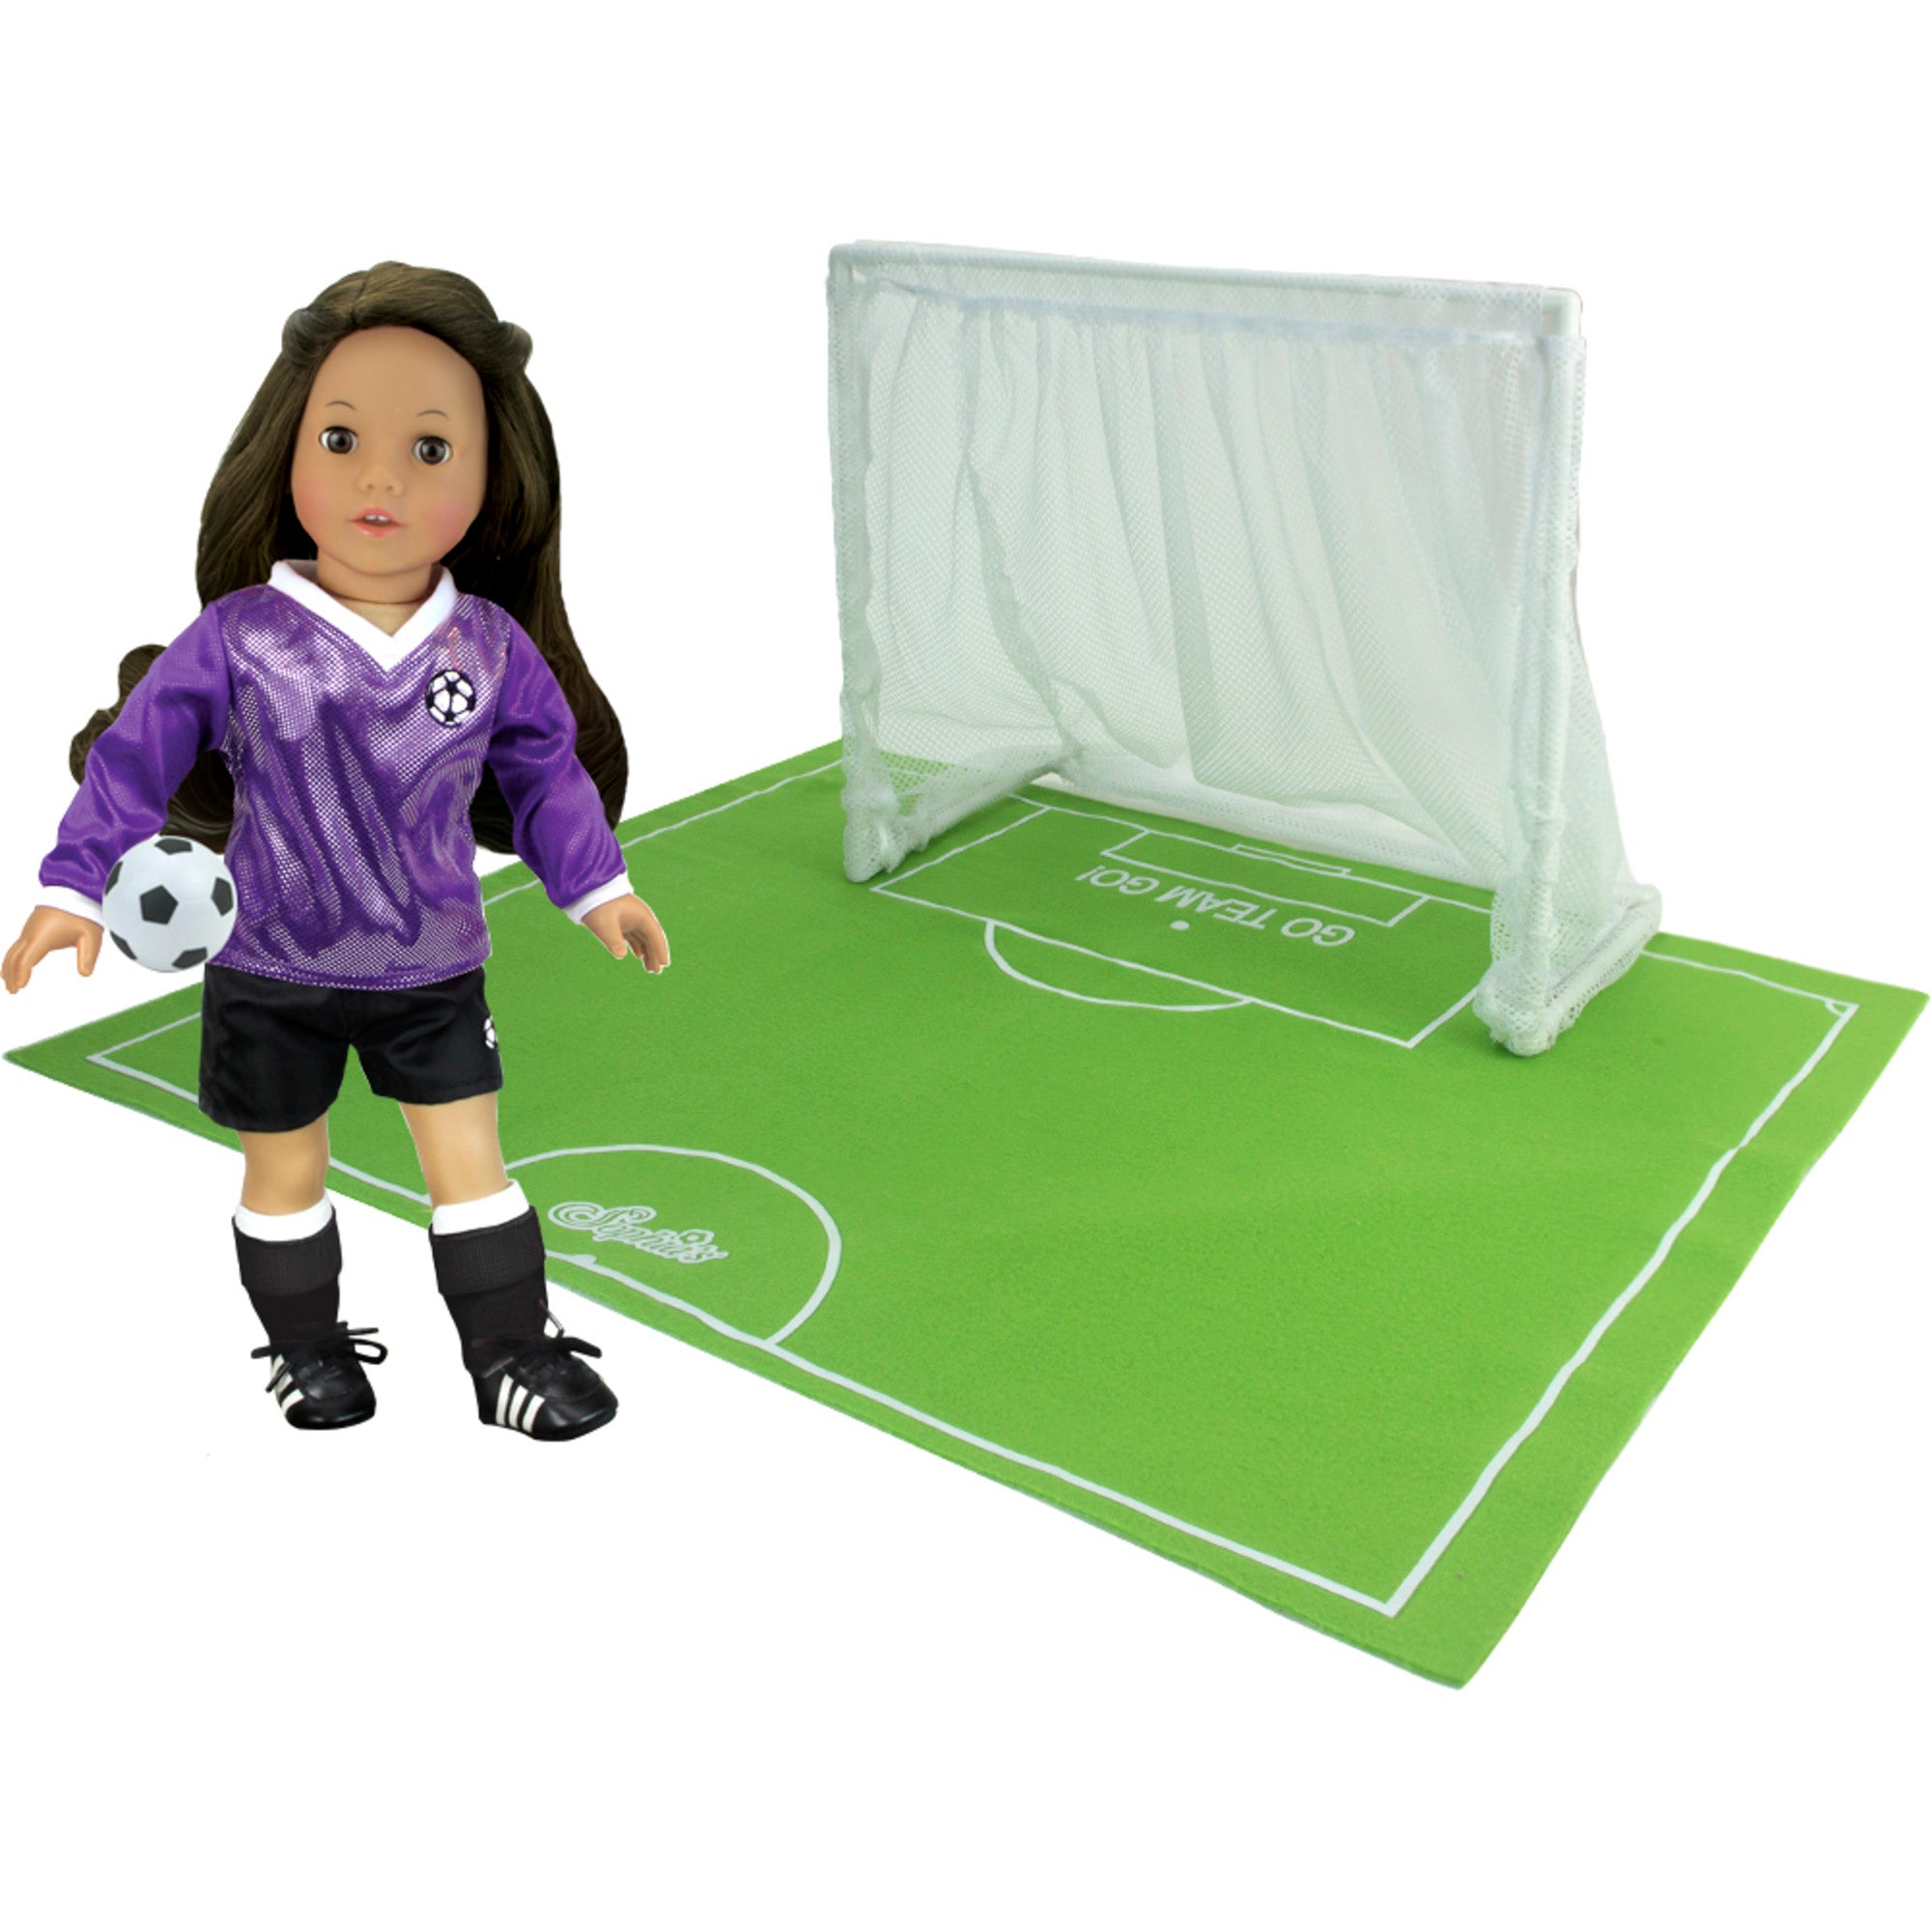 Sophia's - 18" Doll - Sports Net, Sports 1/2 Field & Soccer Ball Set - White